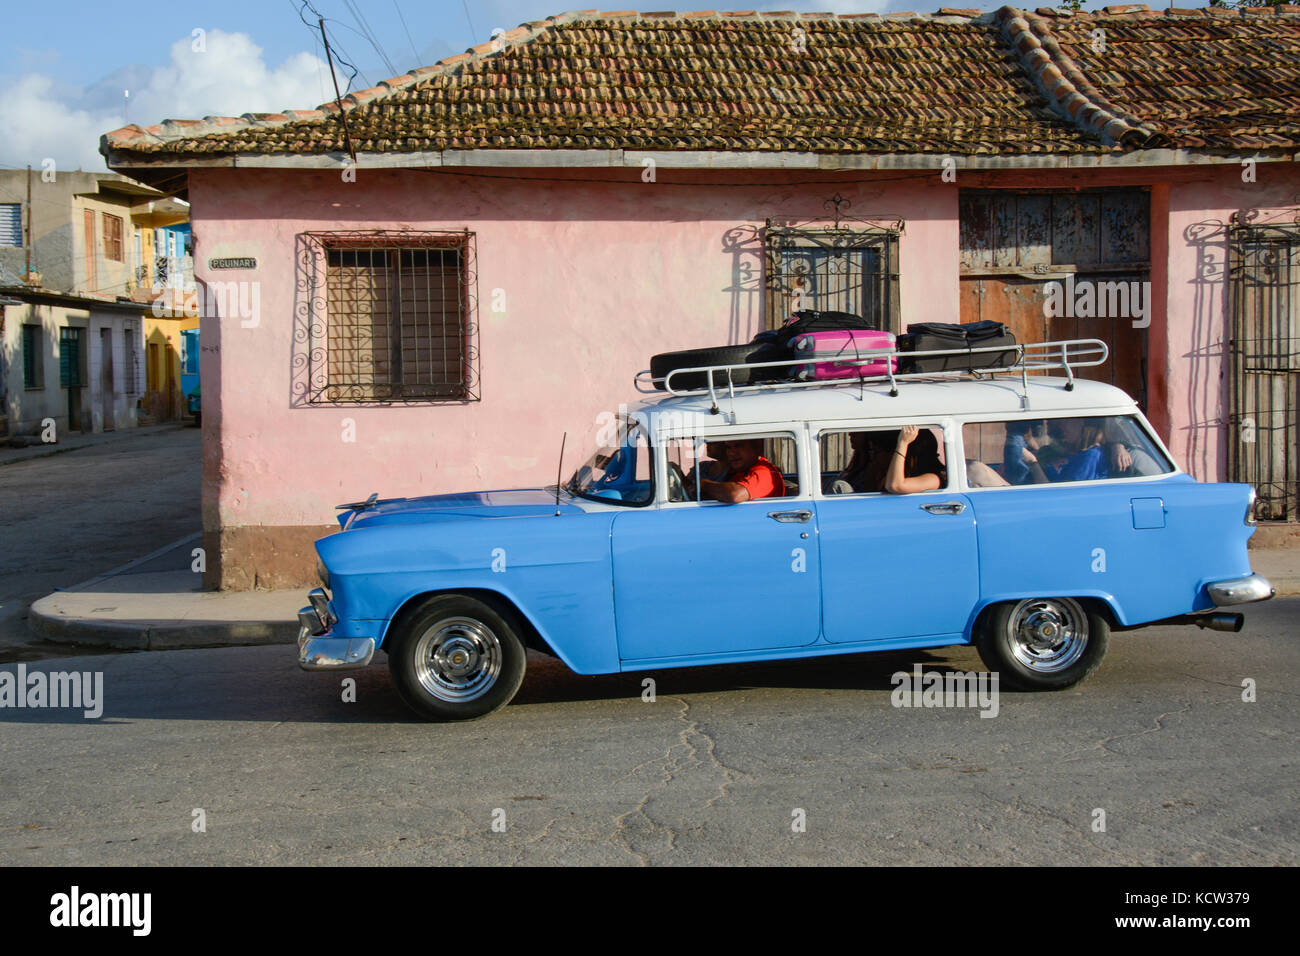 Klassische amerikanische Station Wagon, Trinidad, Kuba Stockfoto